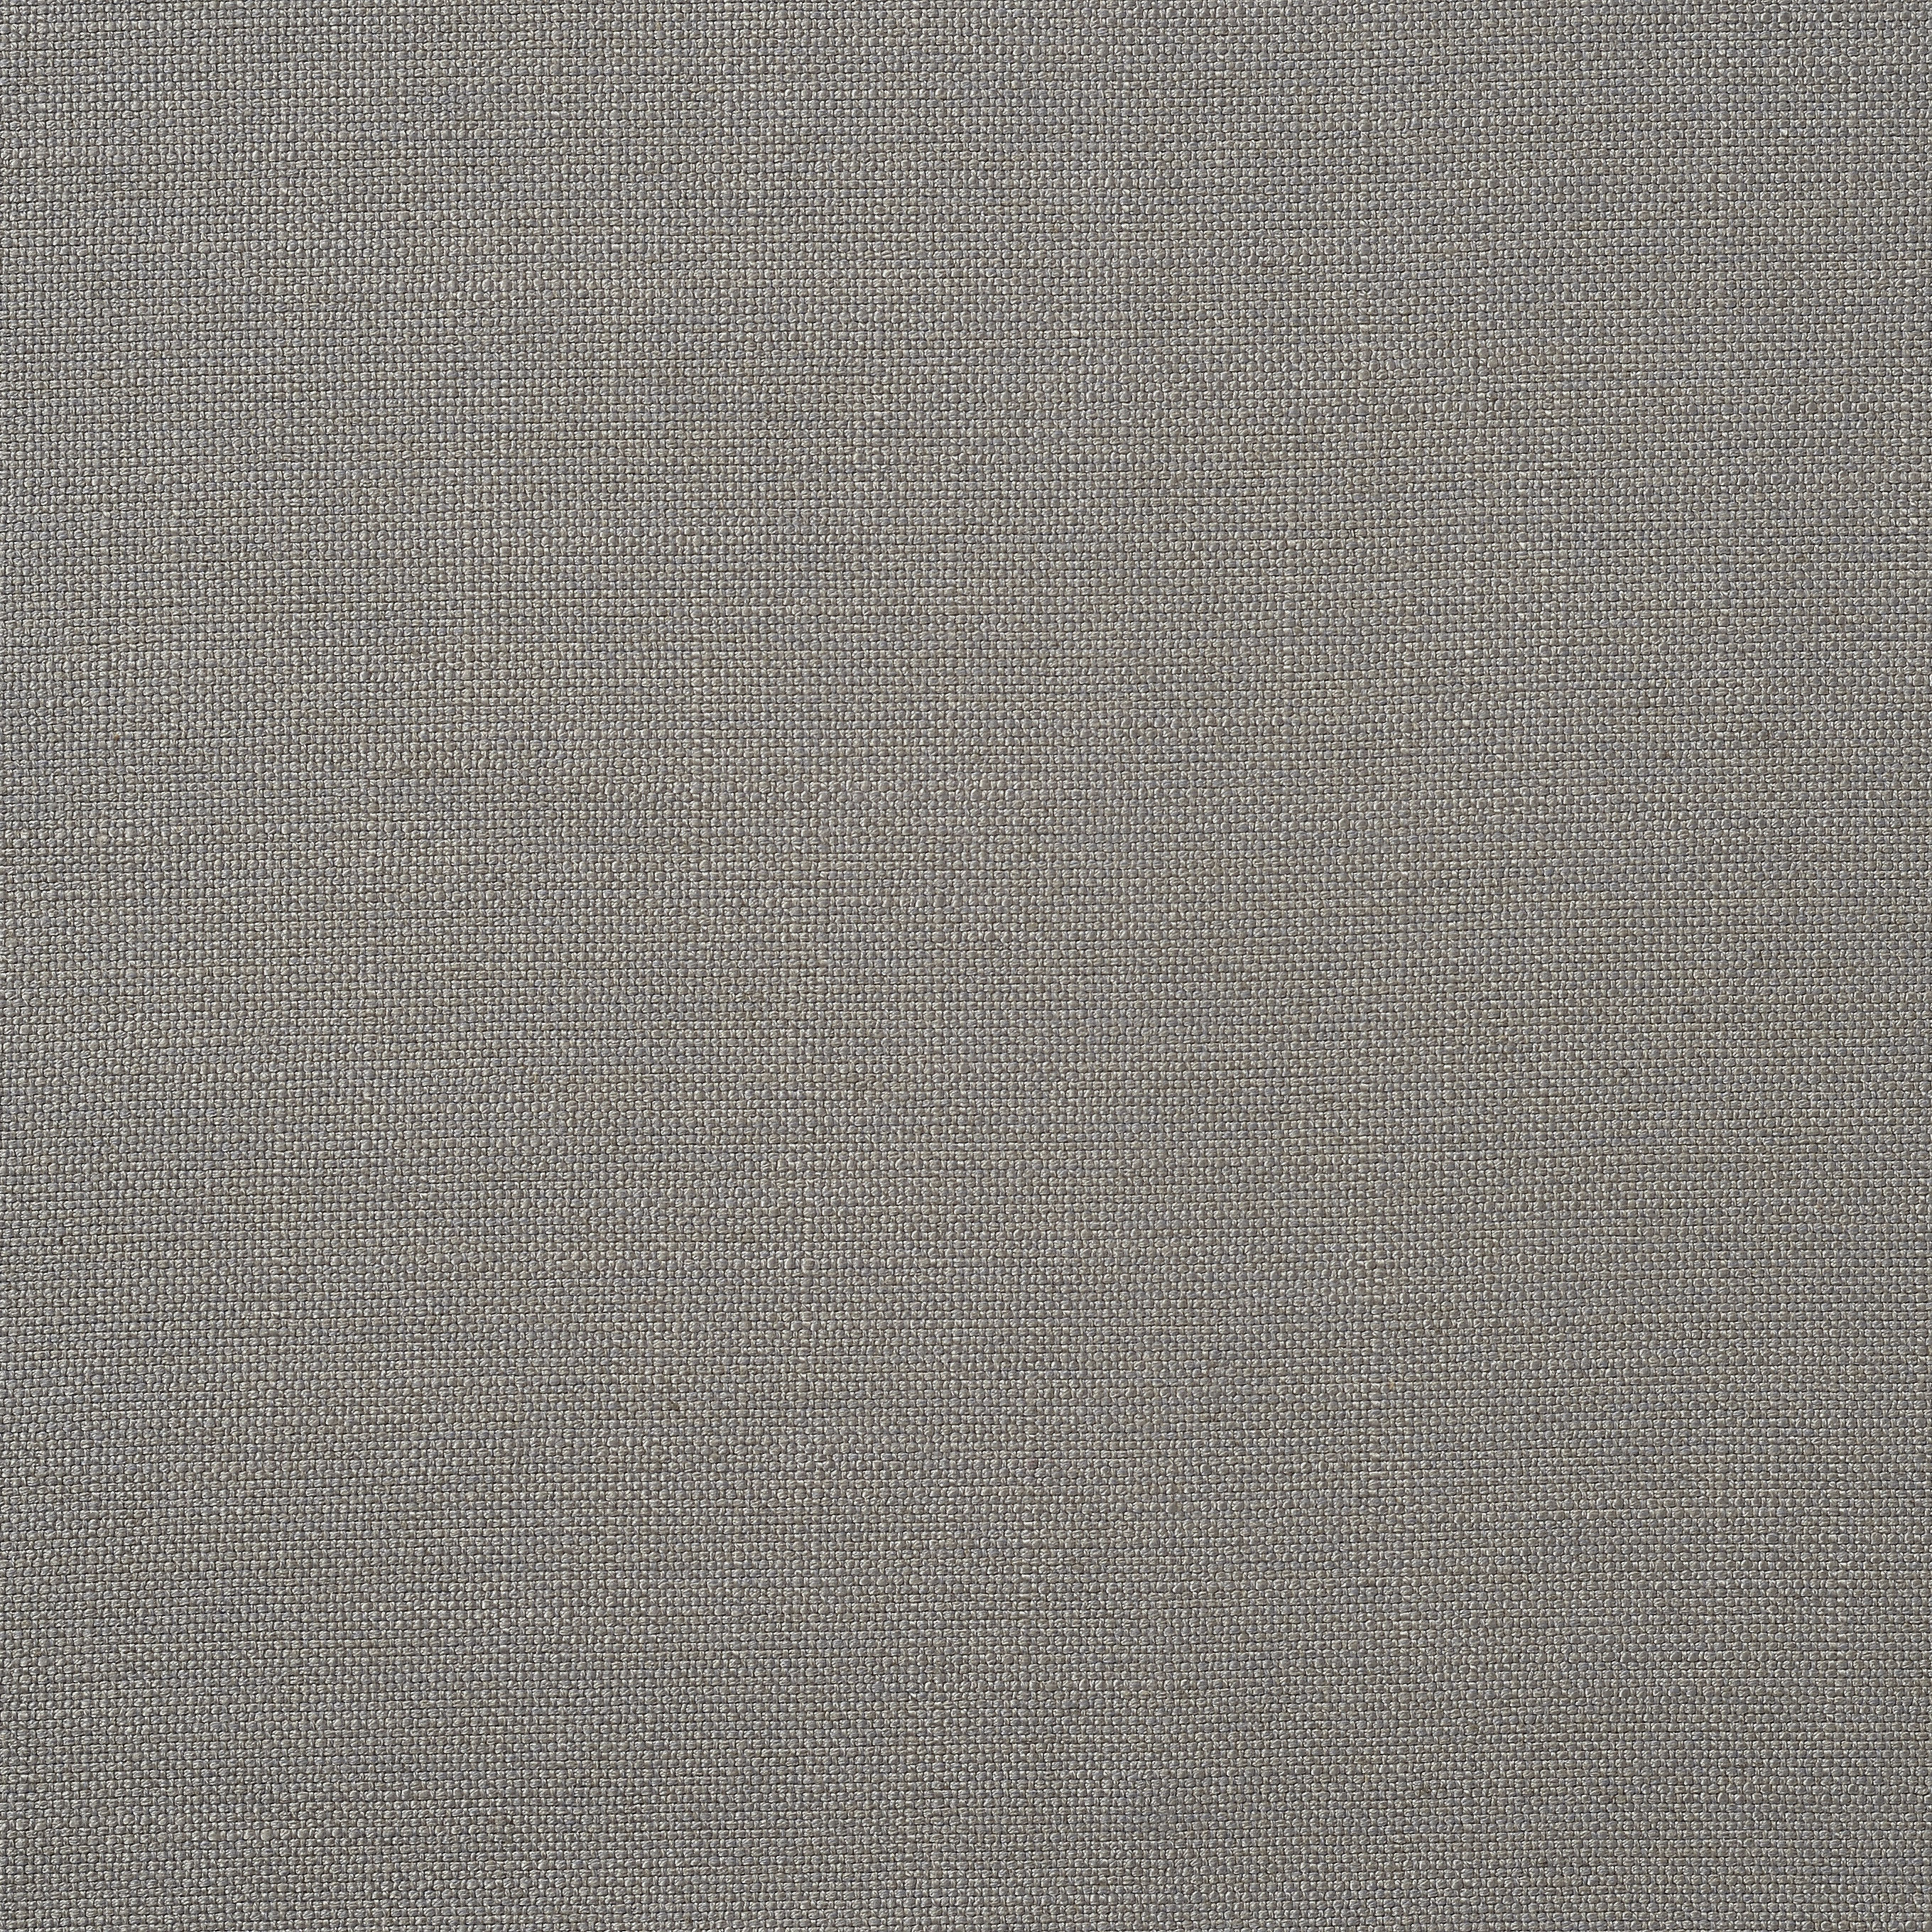 Austen House Linen Mix - Dove Grey